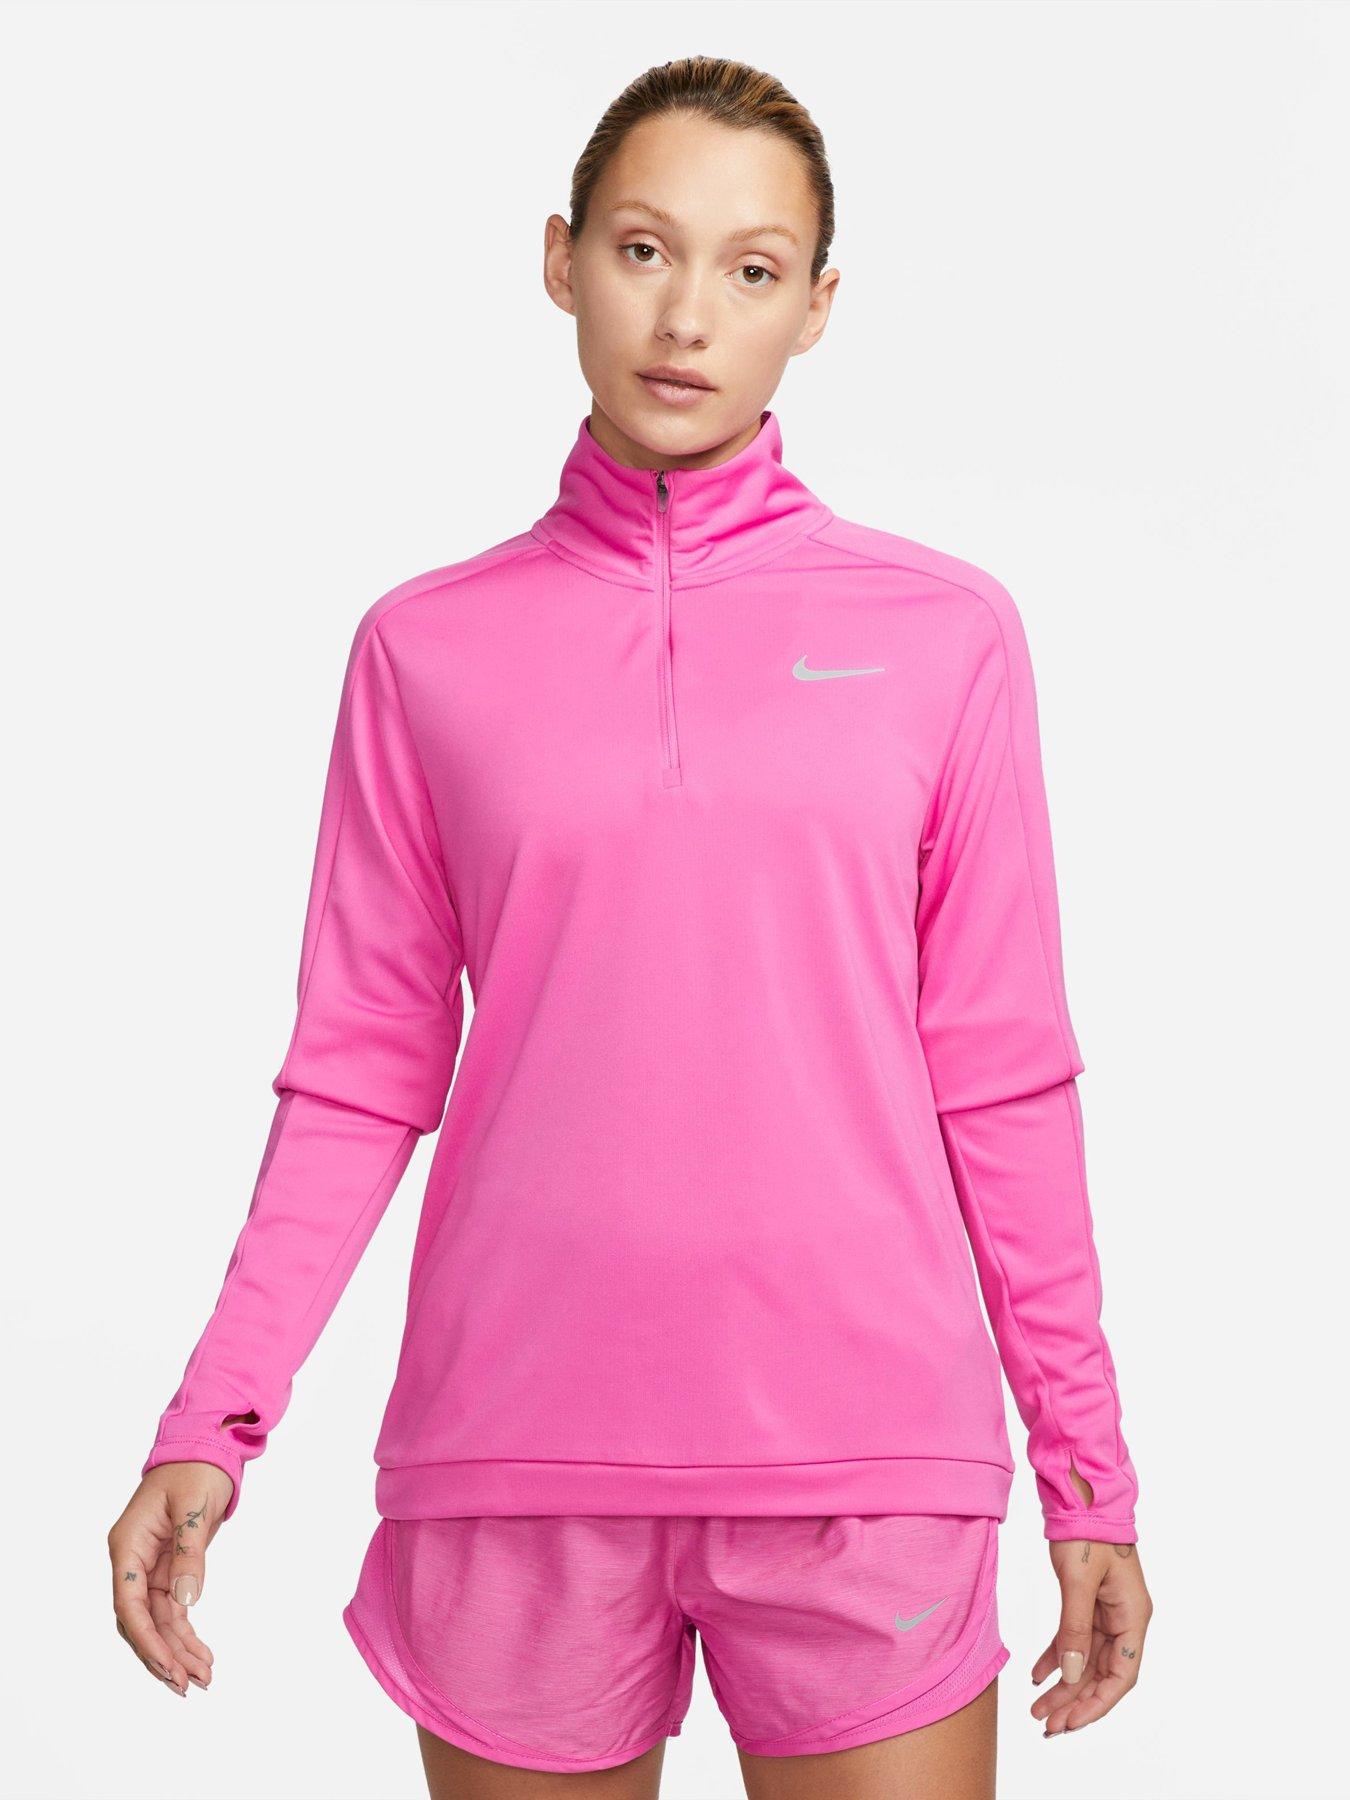 Nike Running Pacer Half Zip Top - Pink 